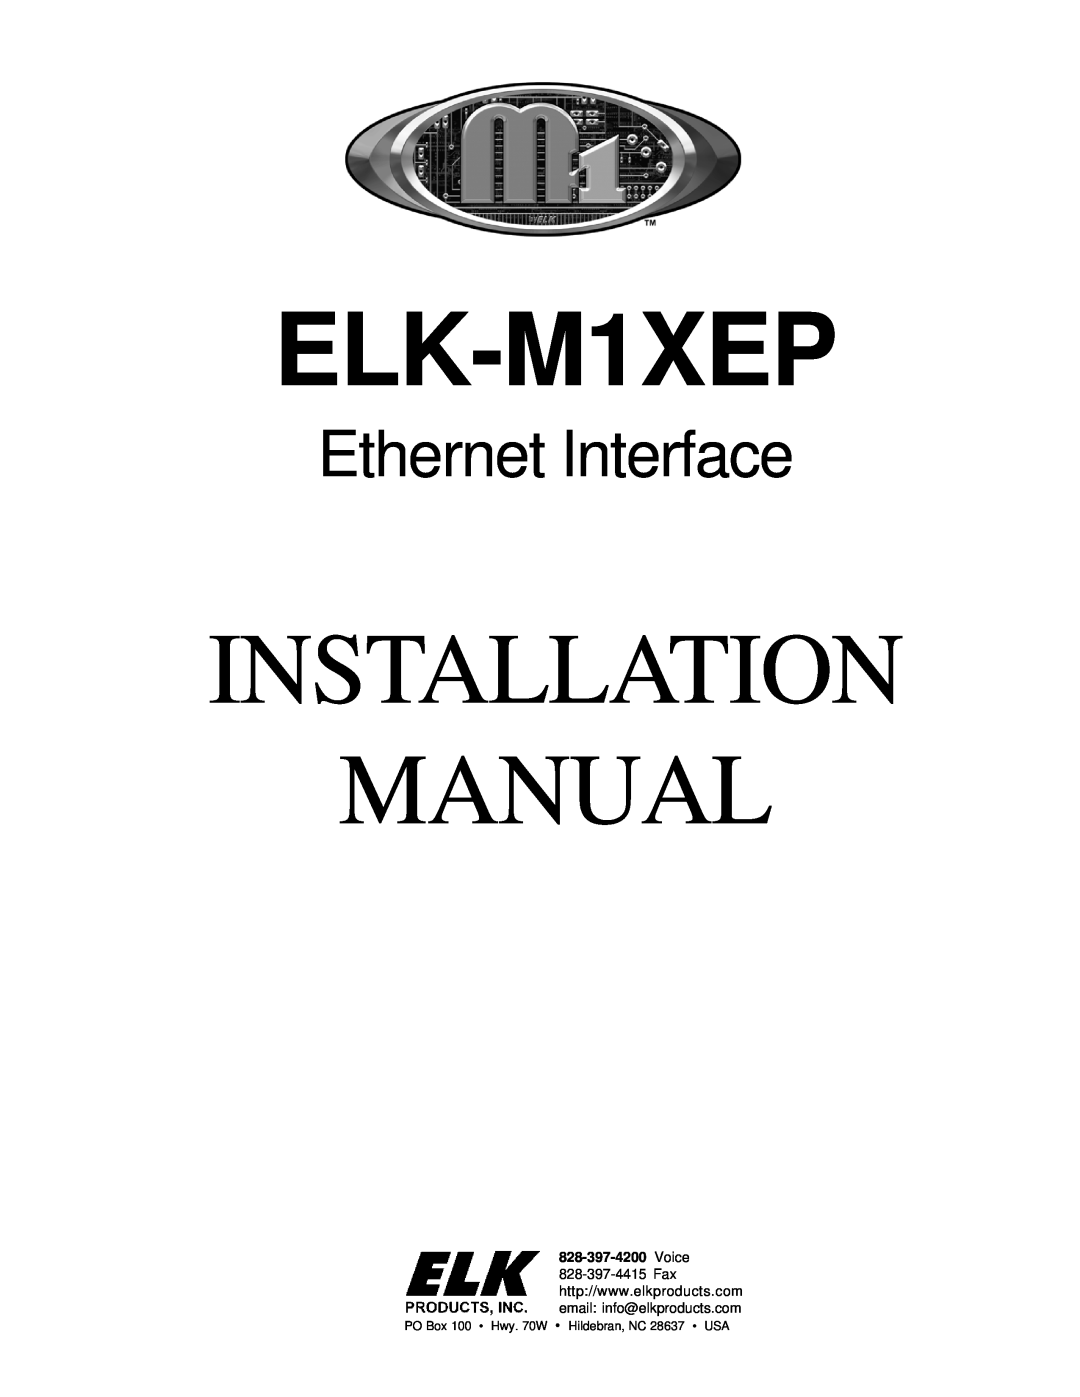 Elk installation manual ELK-M1XEP, Installation Manual, Ethernet Interface, PO Box 100 Hwy. 70W Hildebran, NC 28637 USA 